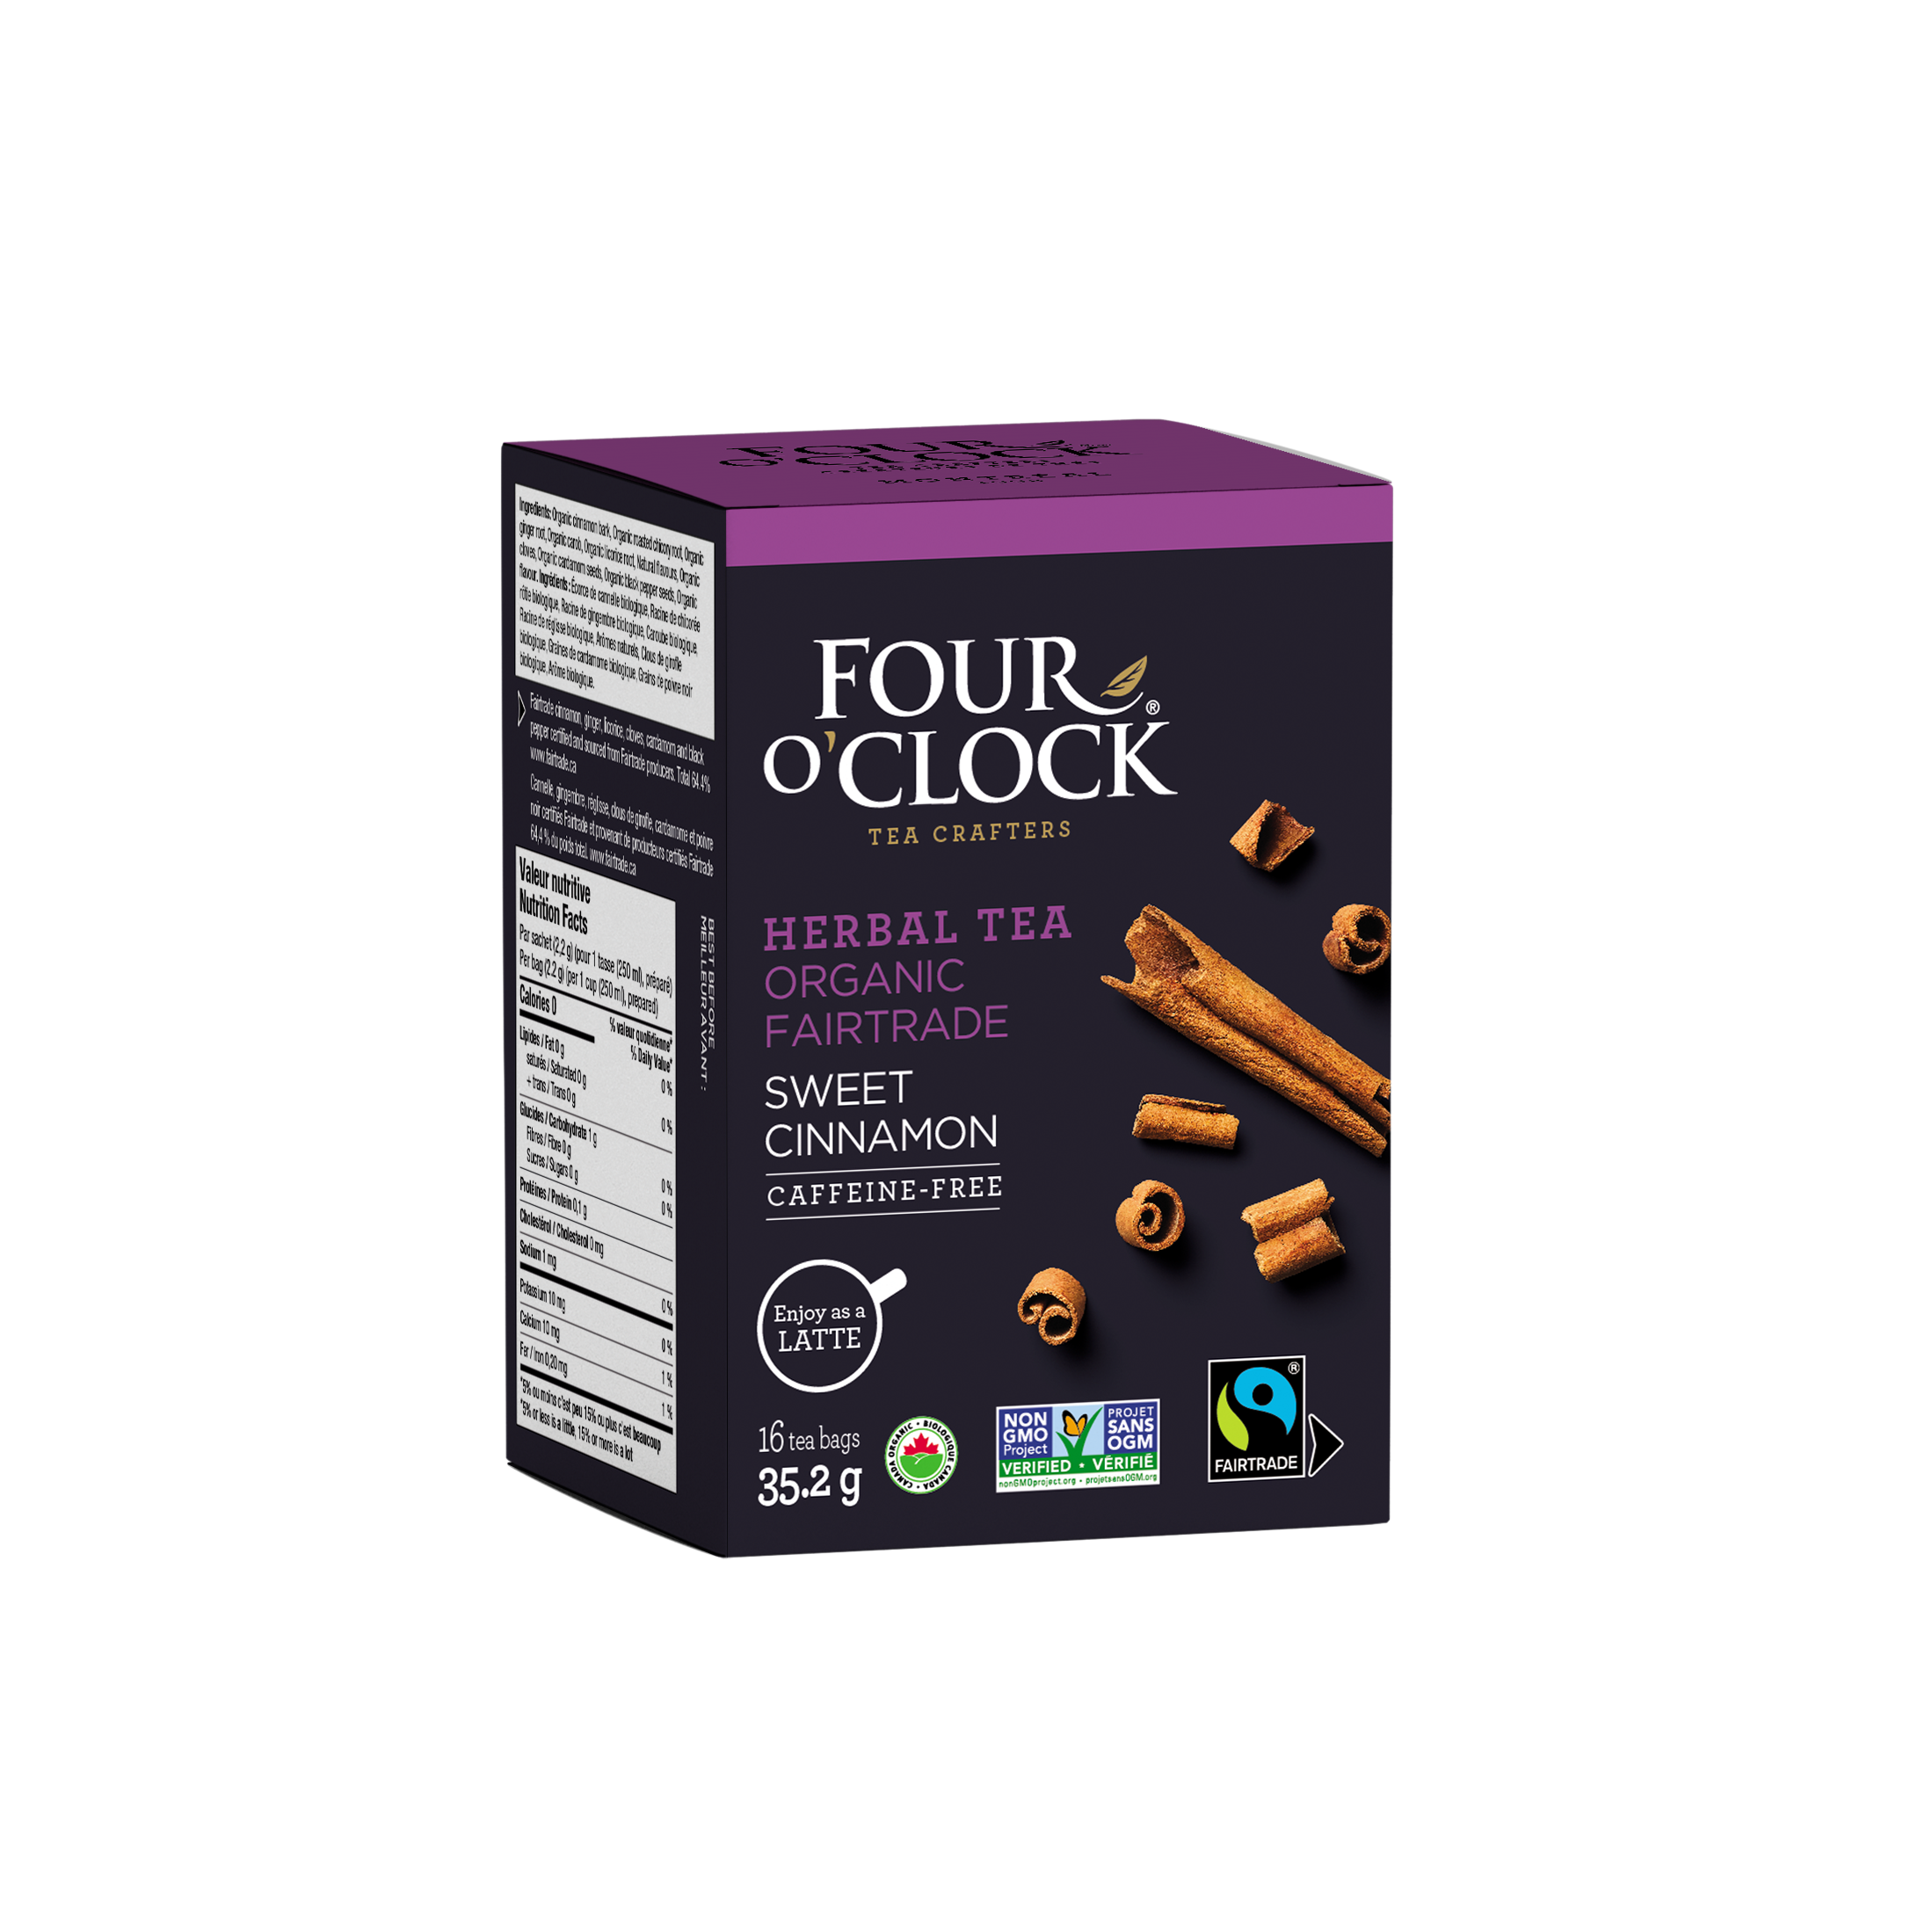 Sweet Cinnamon Organic Fairtrade Herbal Tea